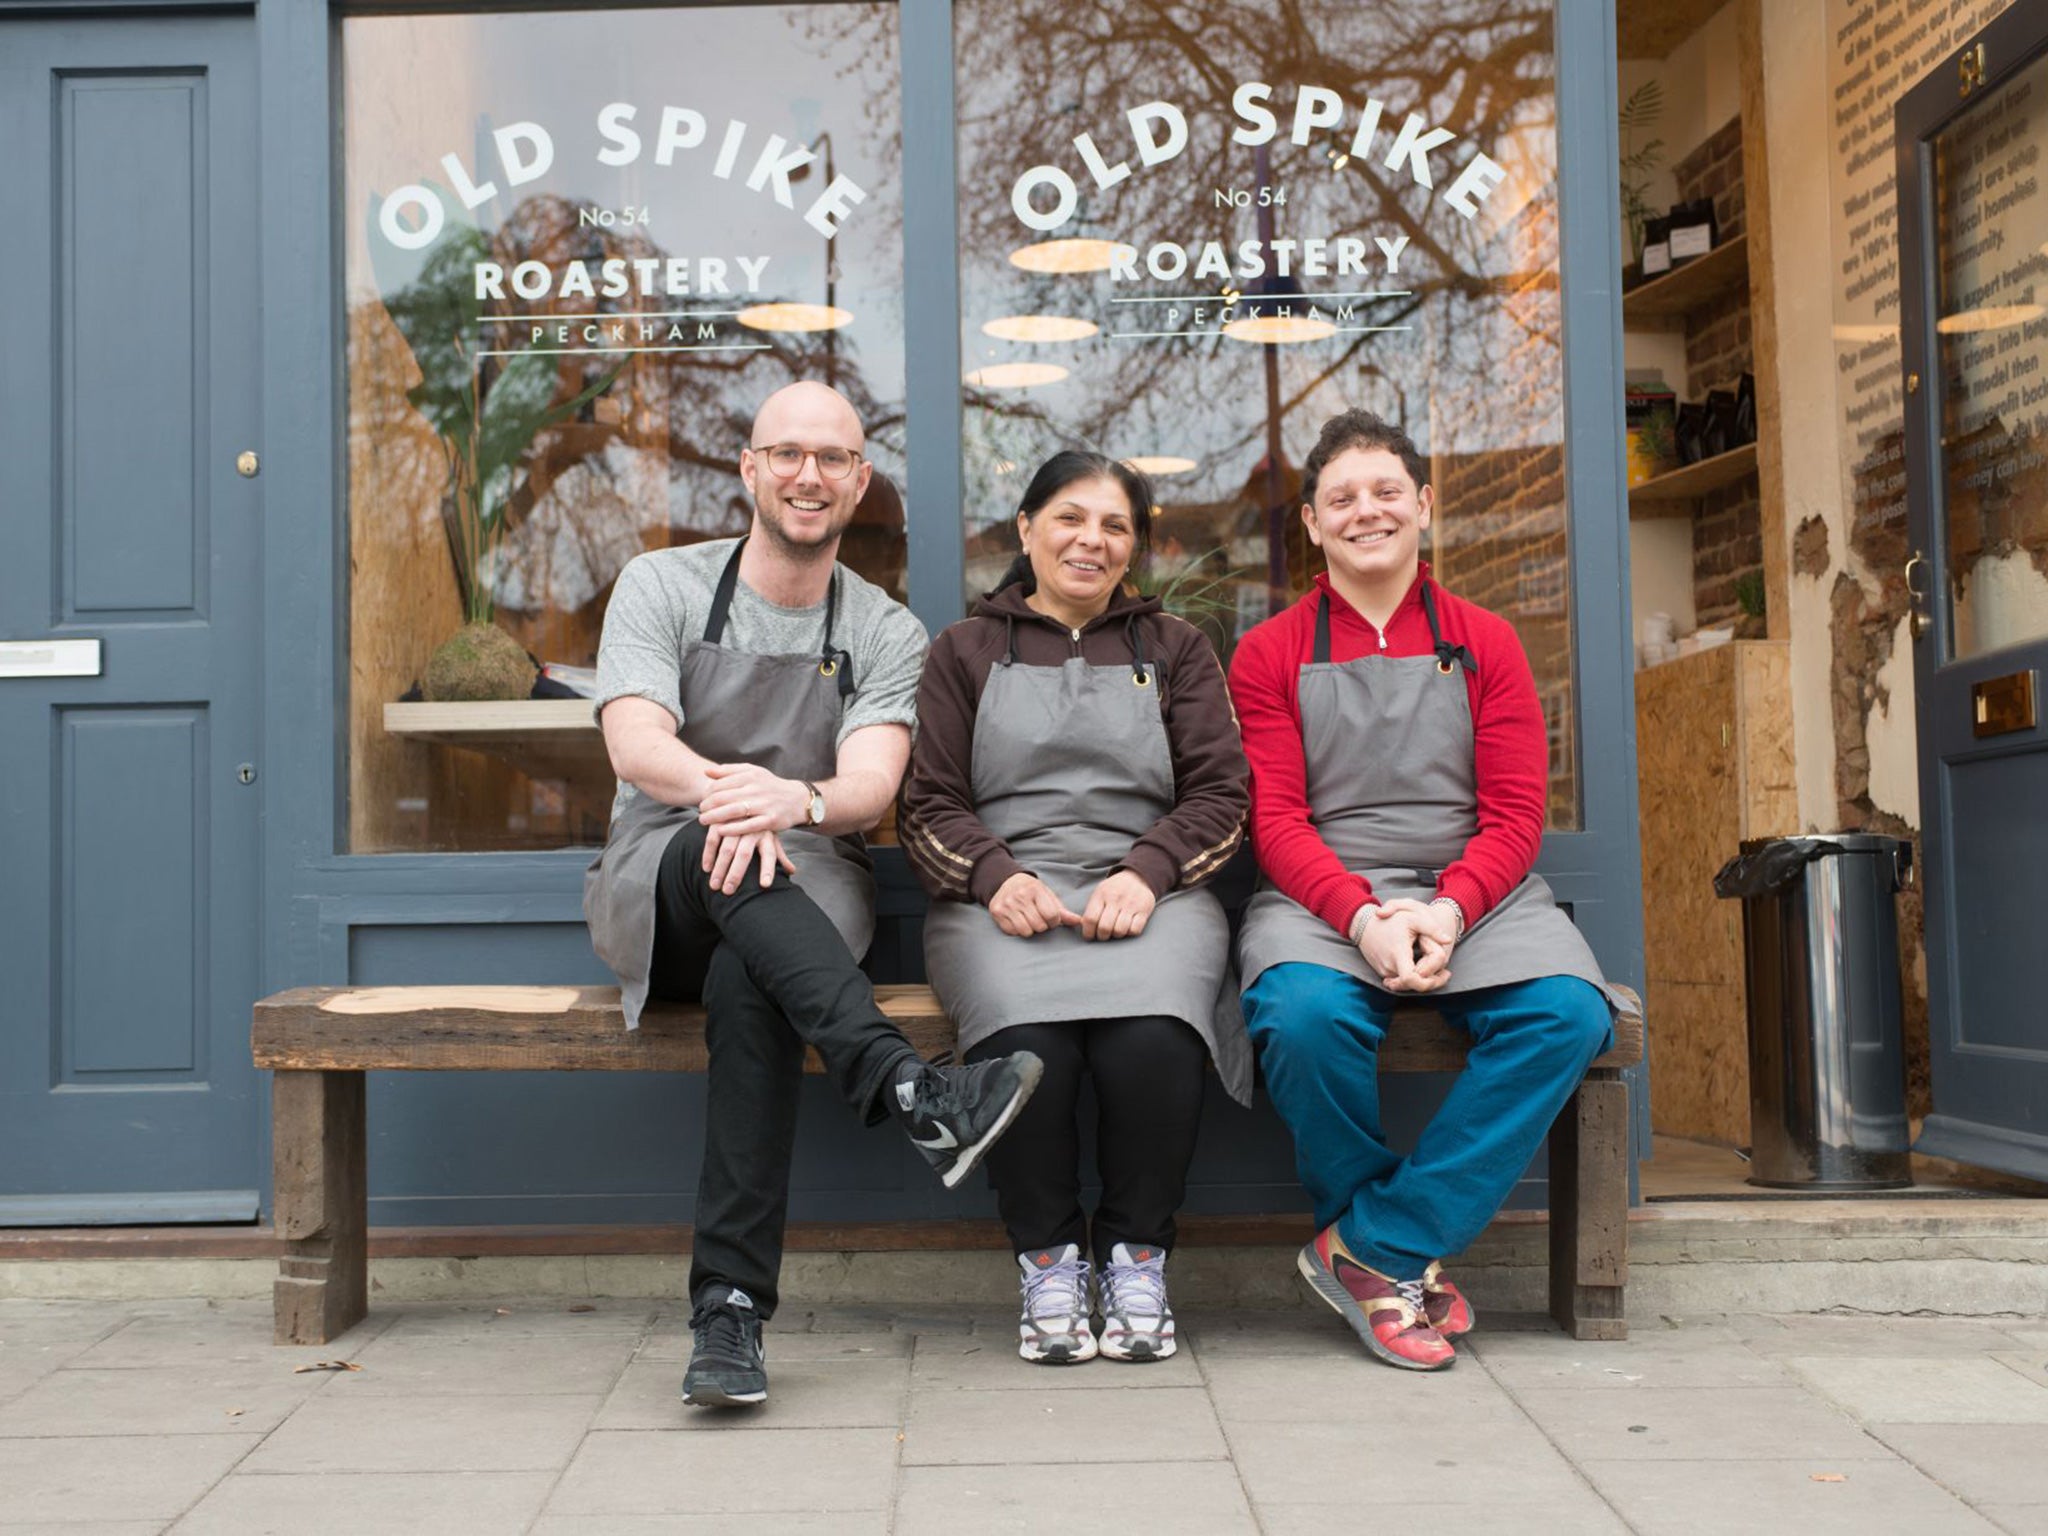 The Old Spike Roastery: The London coffee roasting company